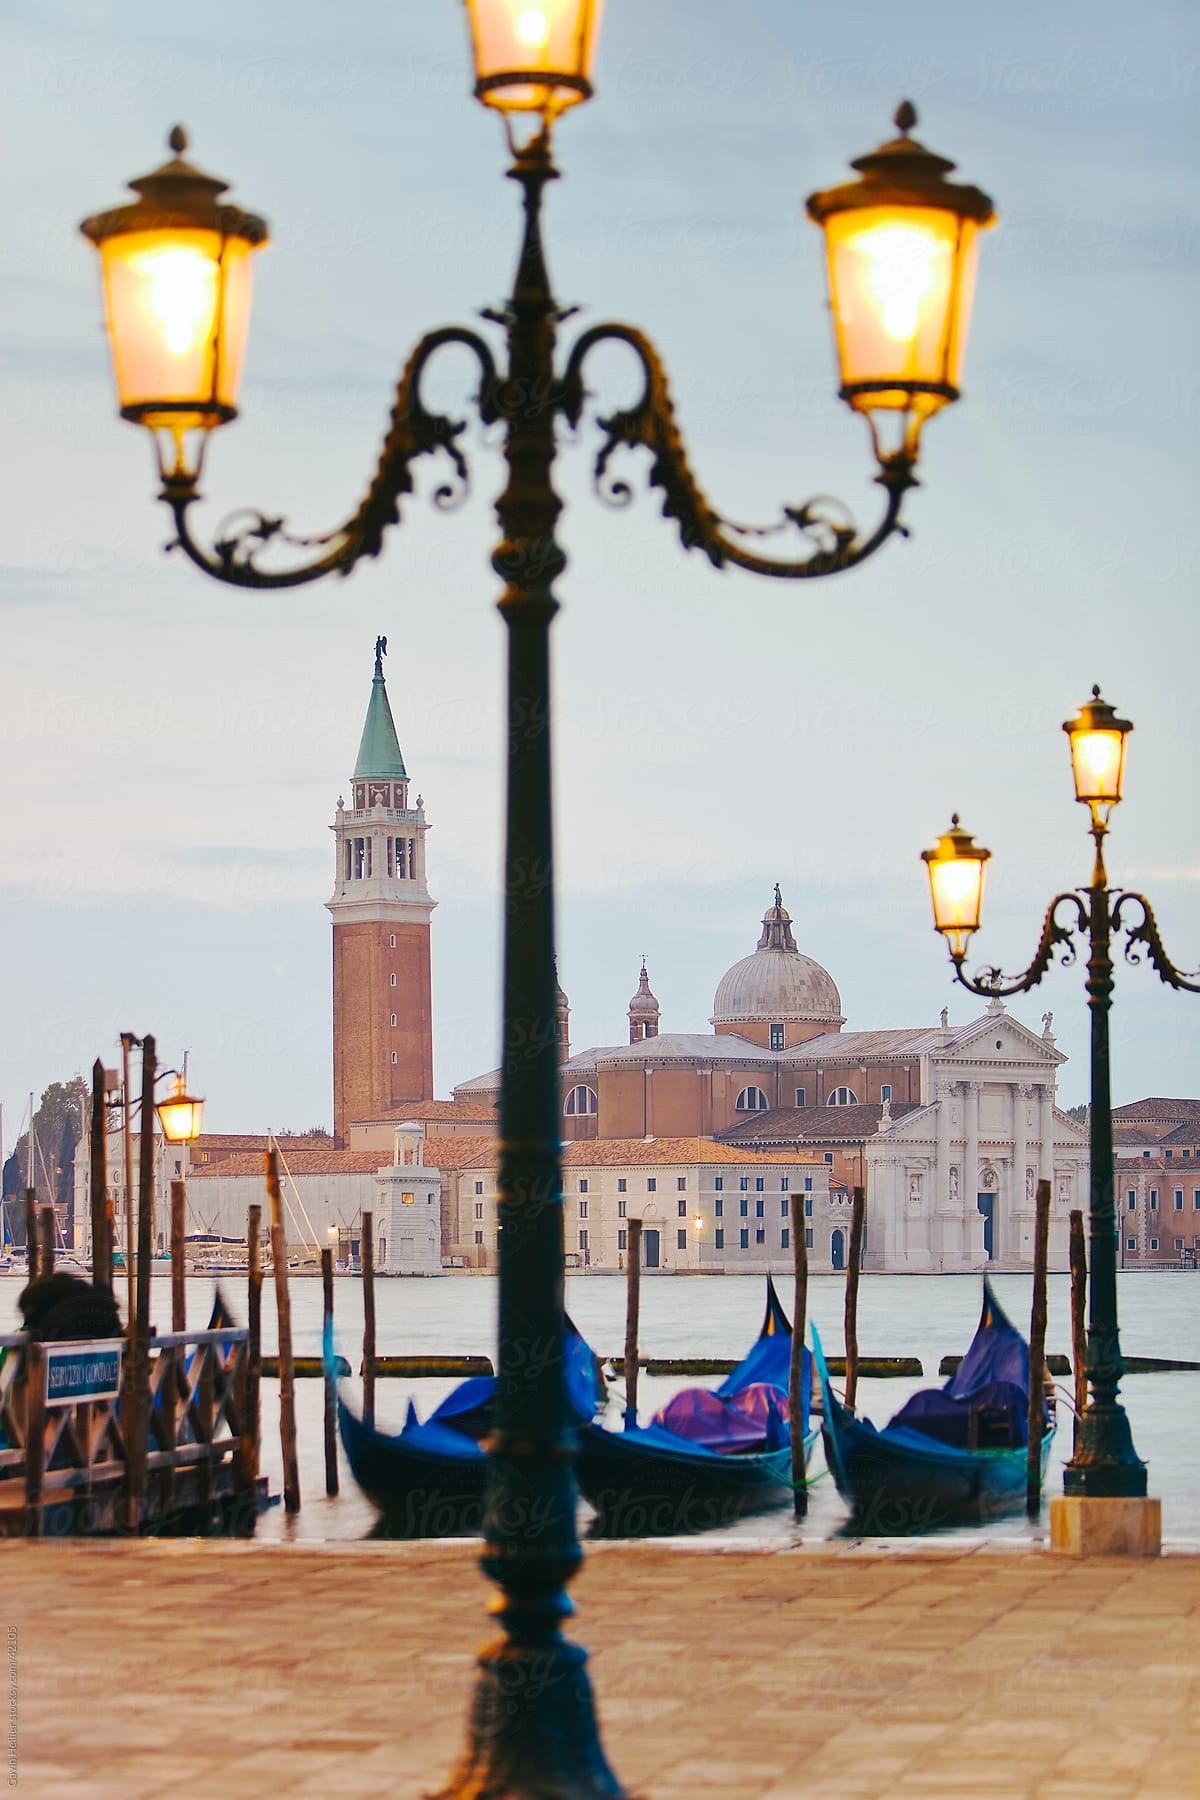 Quay at St Mark\'s Square with Gondolas and the view to San Giorgio Maggiore Island, Venice, Italy, Europe